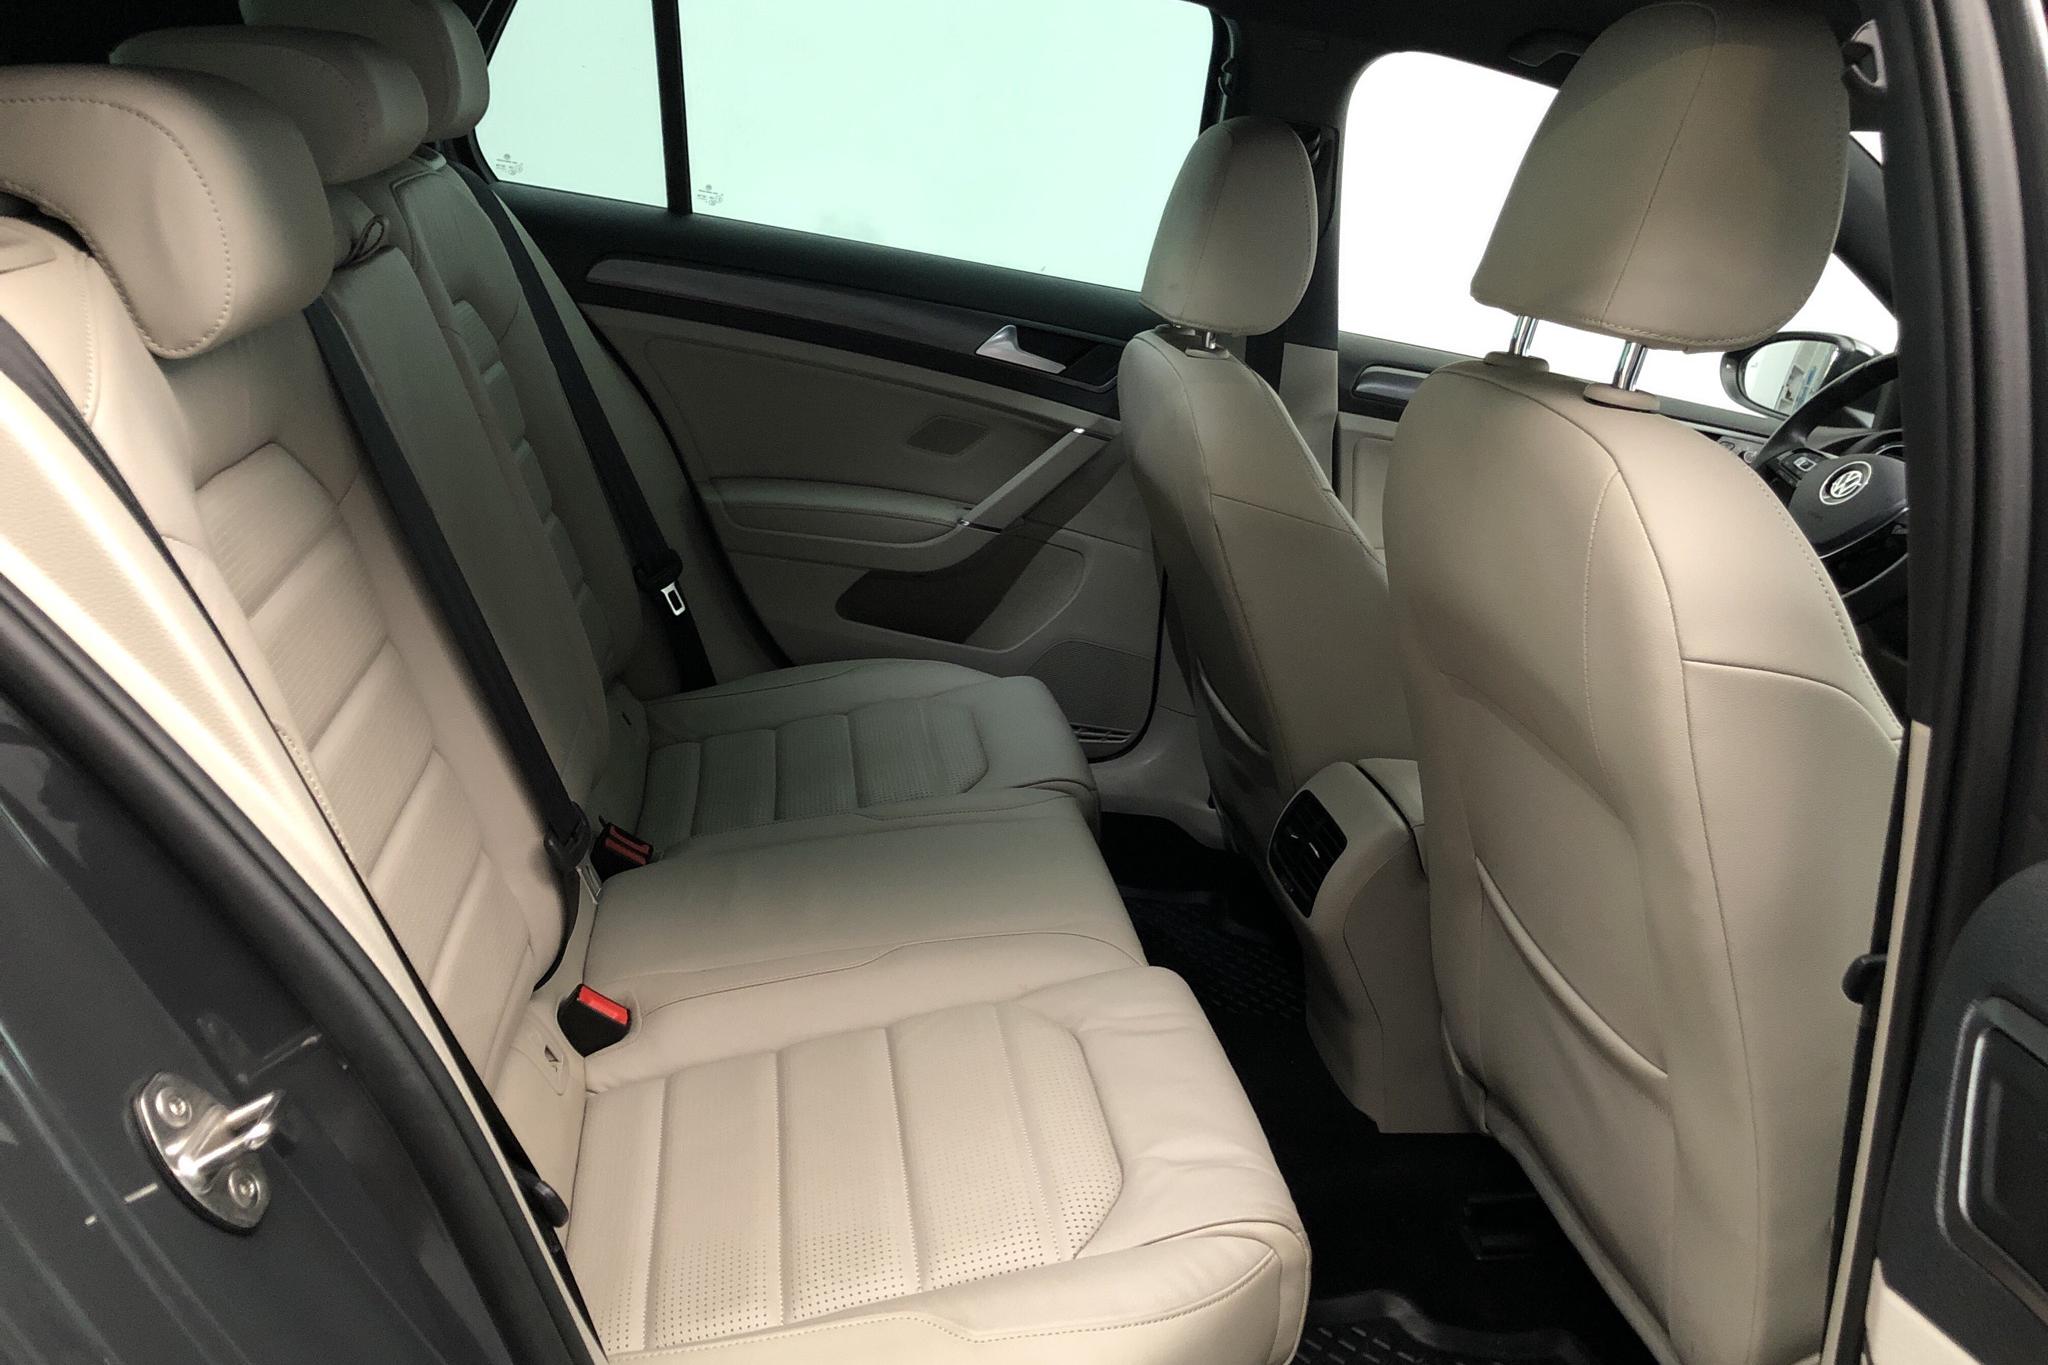 VW e-Golf VII 5dr (136hk) - 9 053 mil - Automat - Dark Grey - 2019